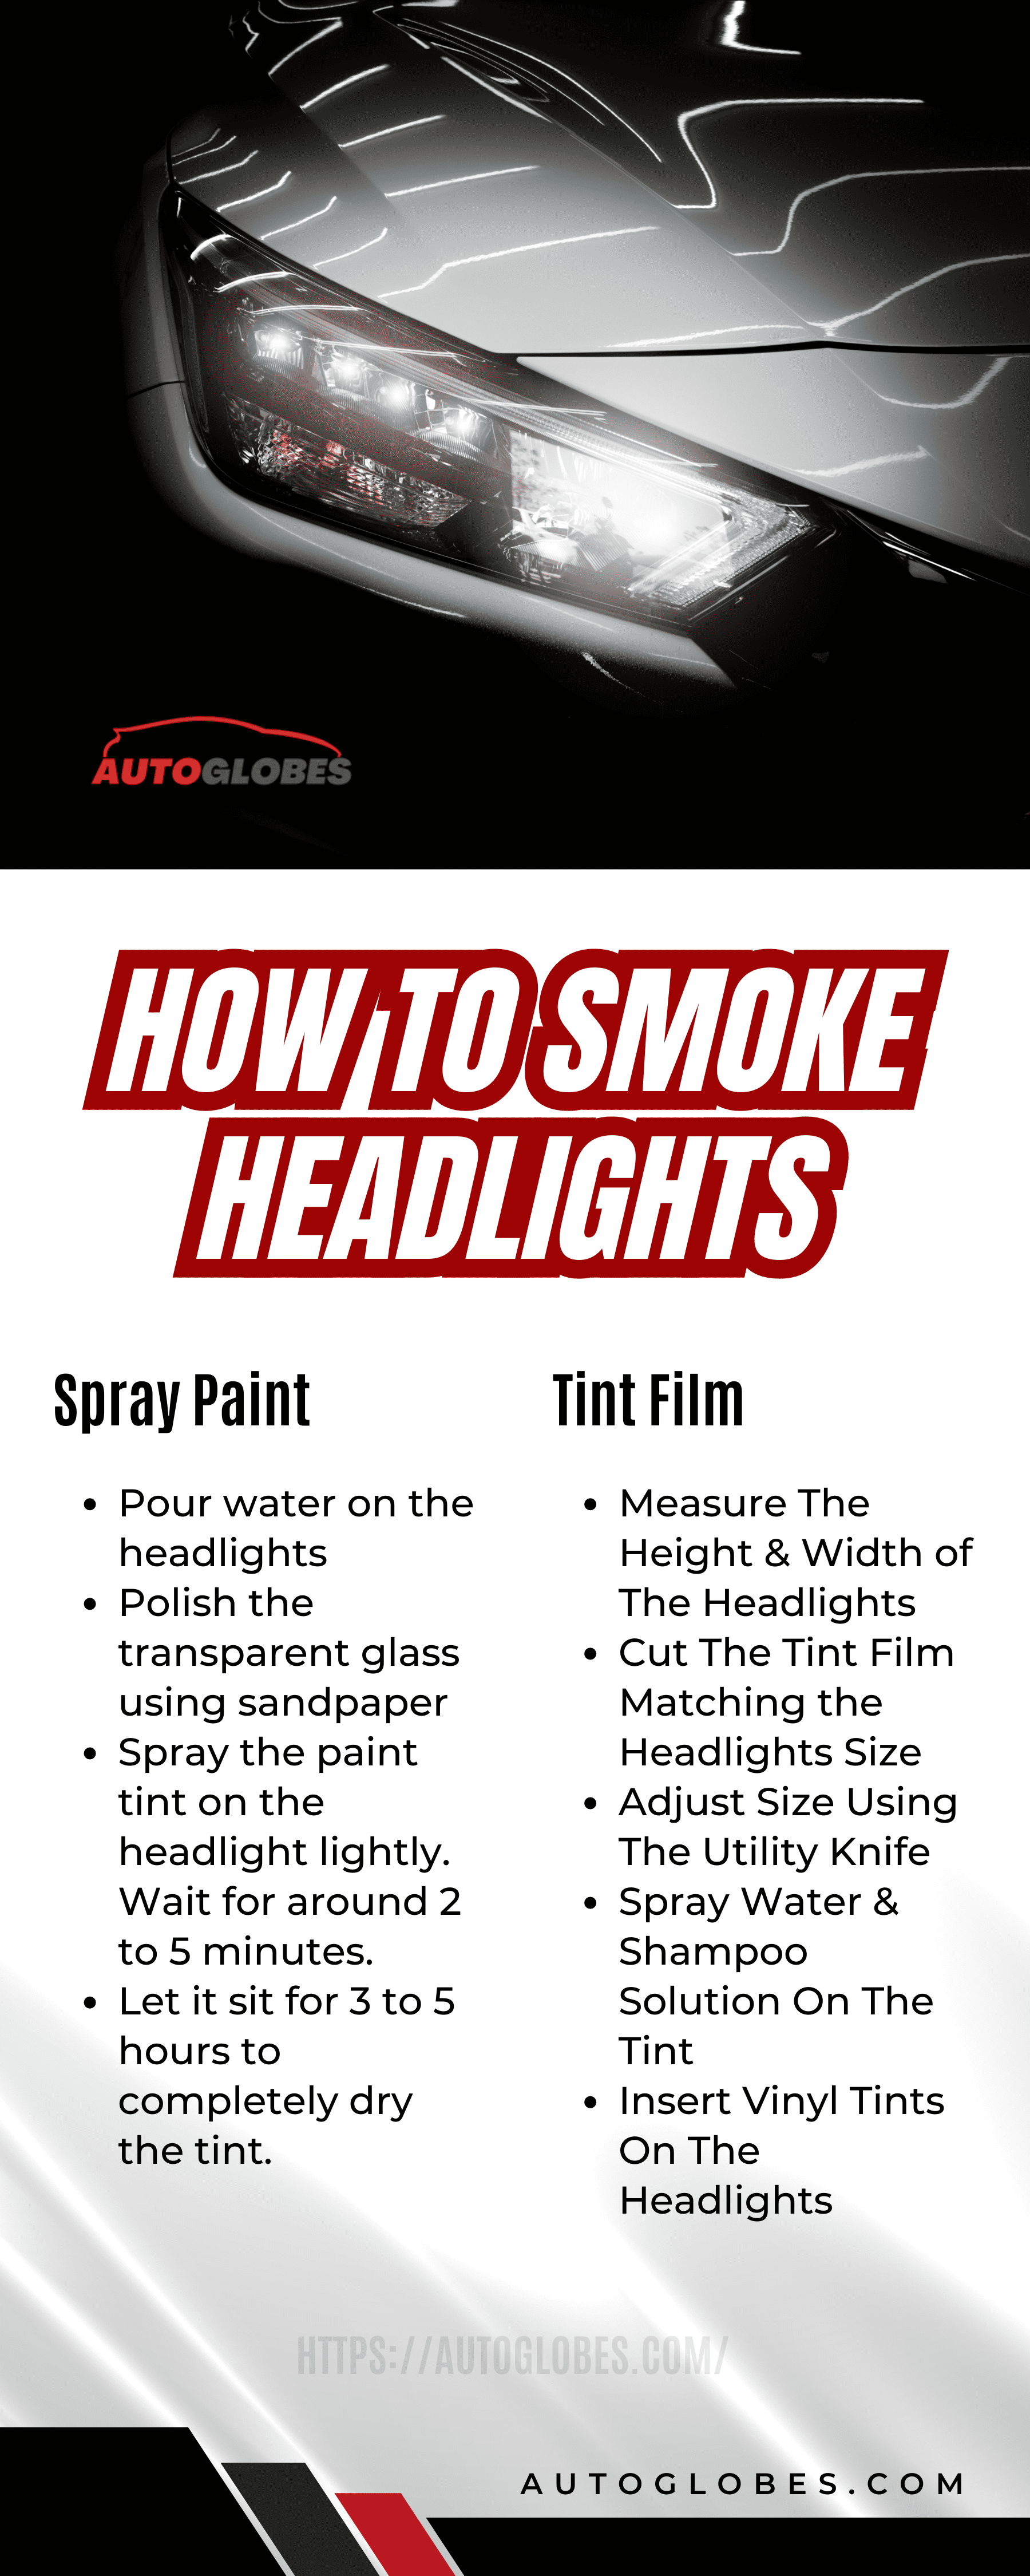 How To Smoke Headlights Infographic